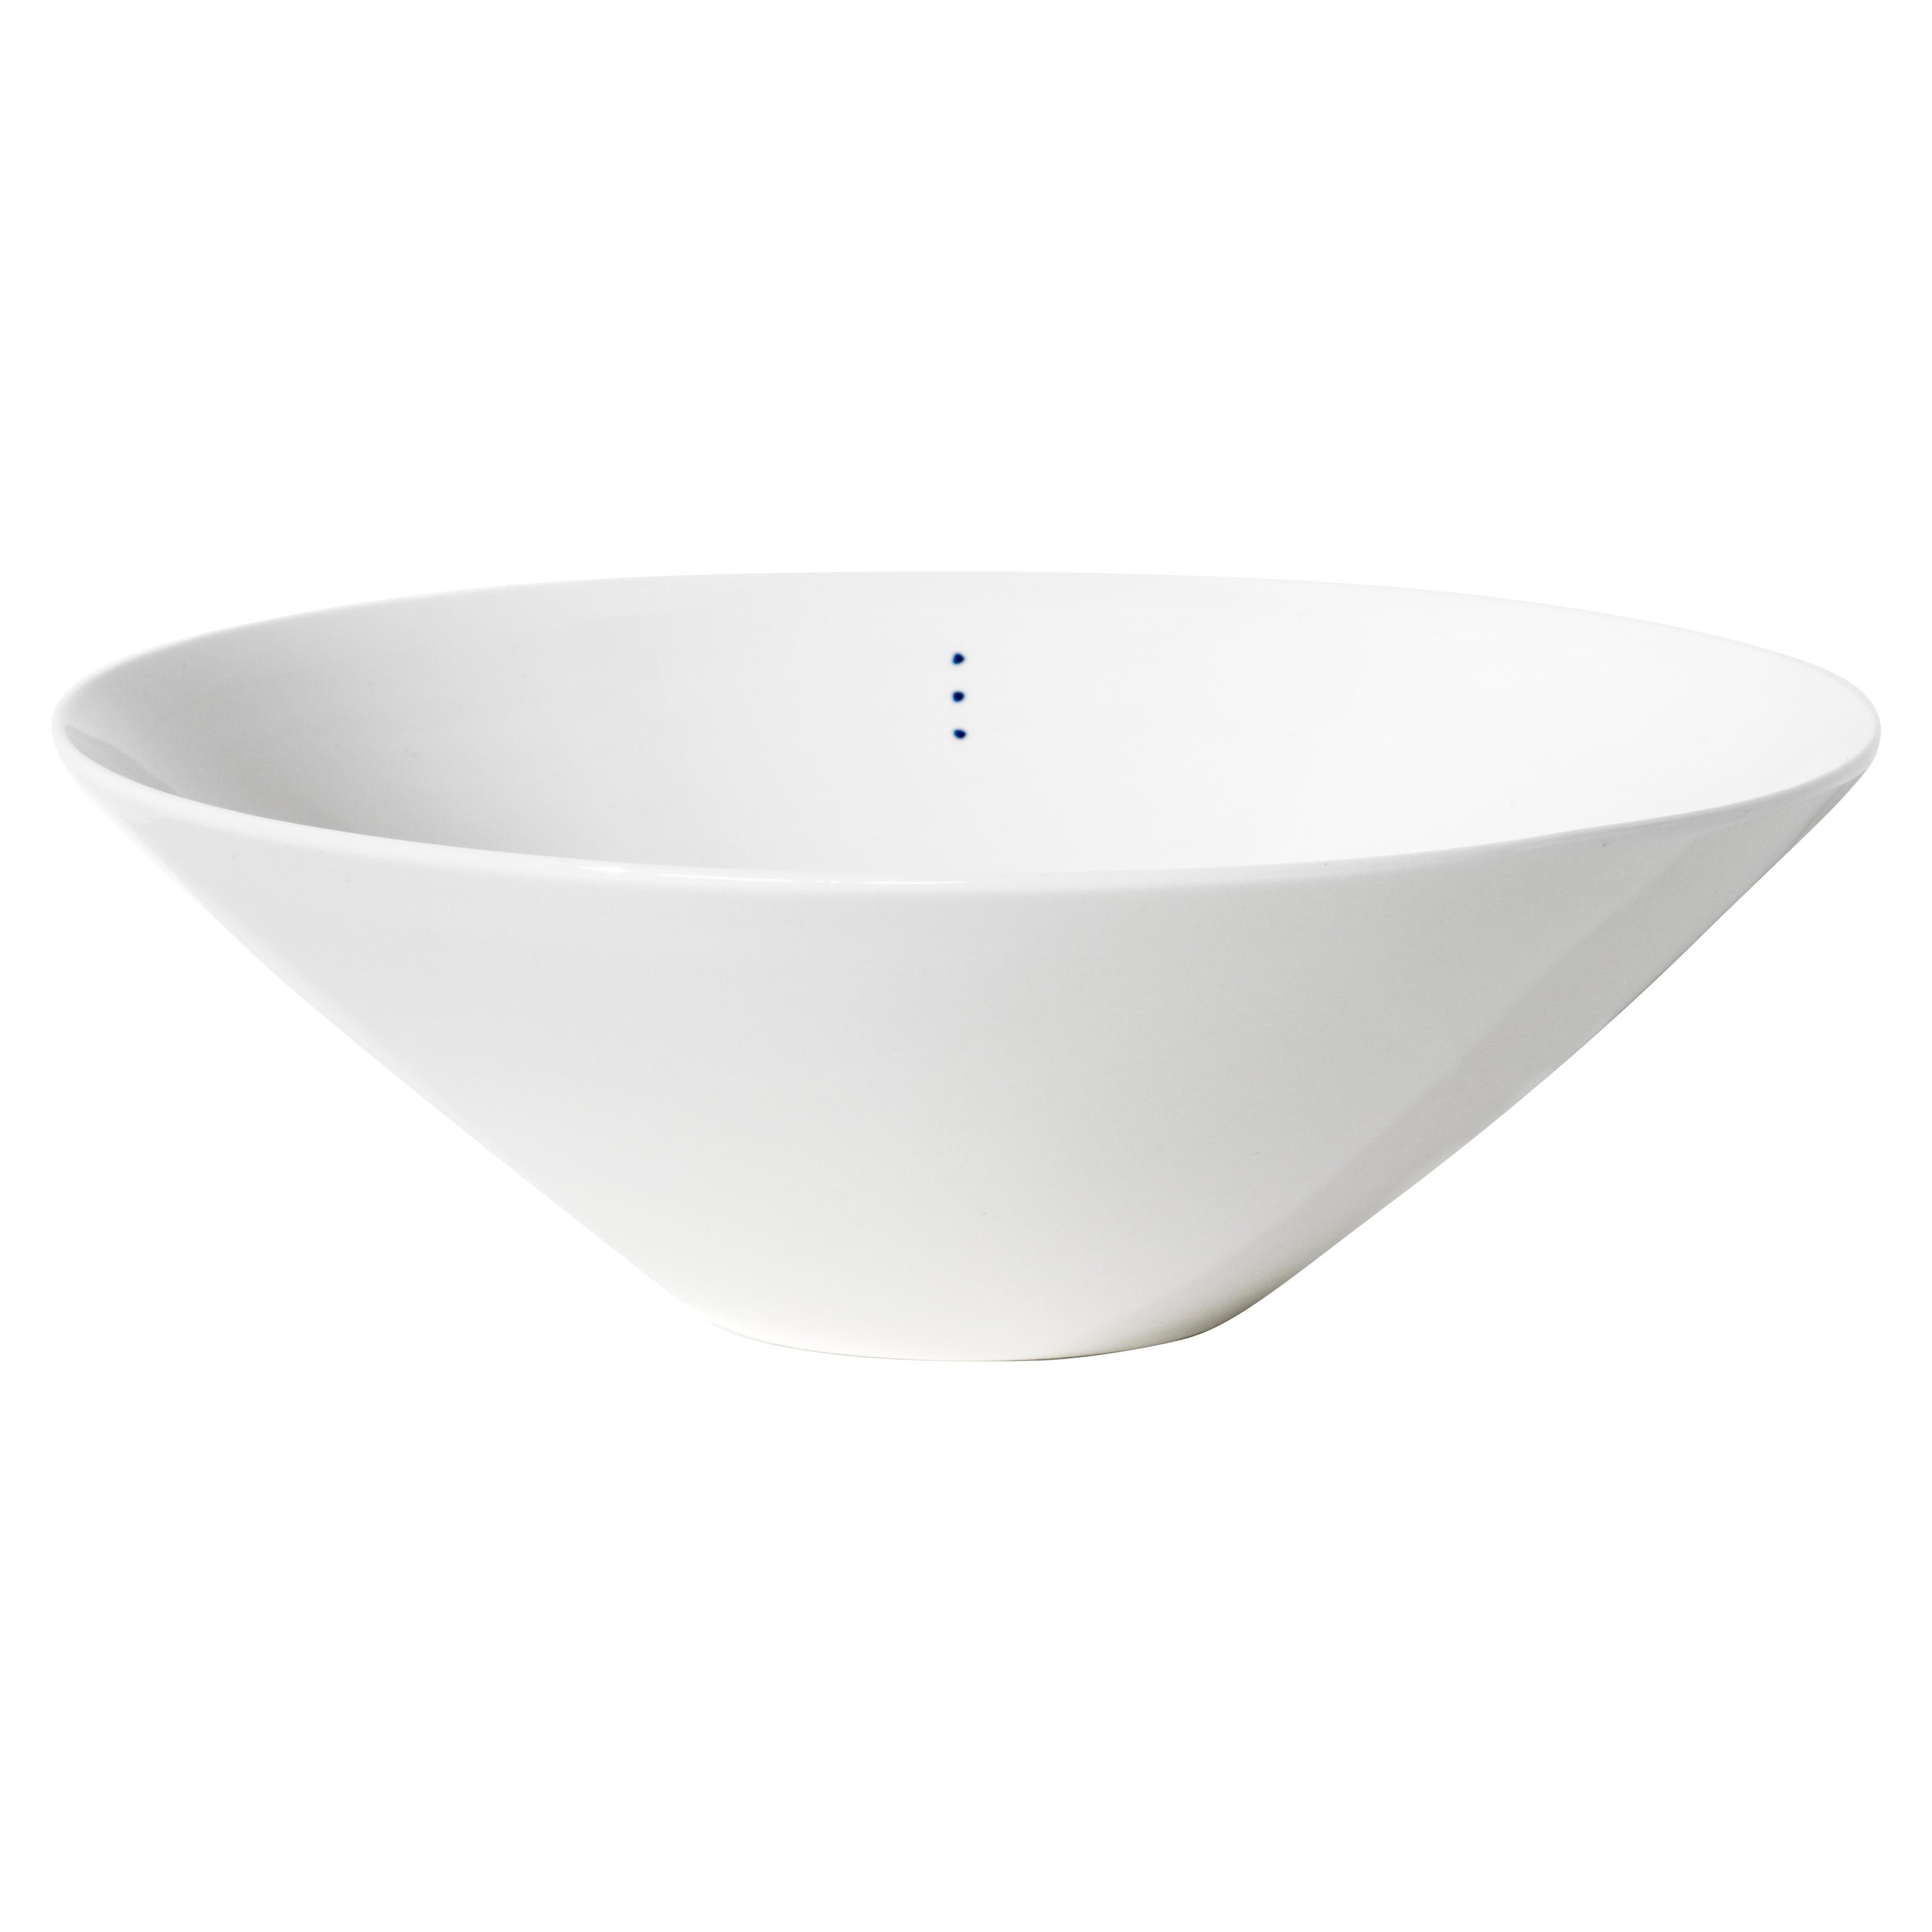 Shiro bowl large 3 dots